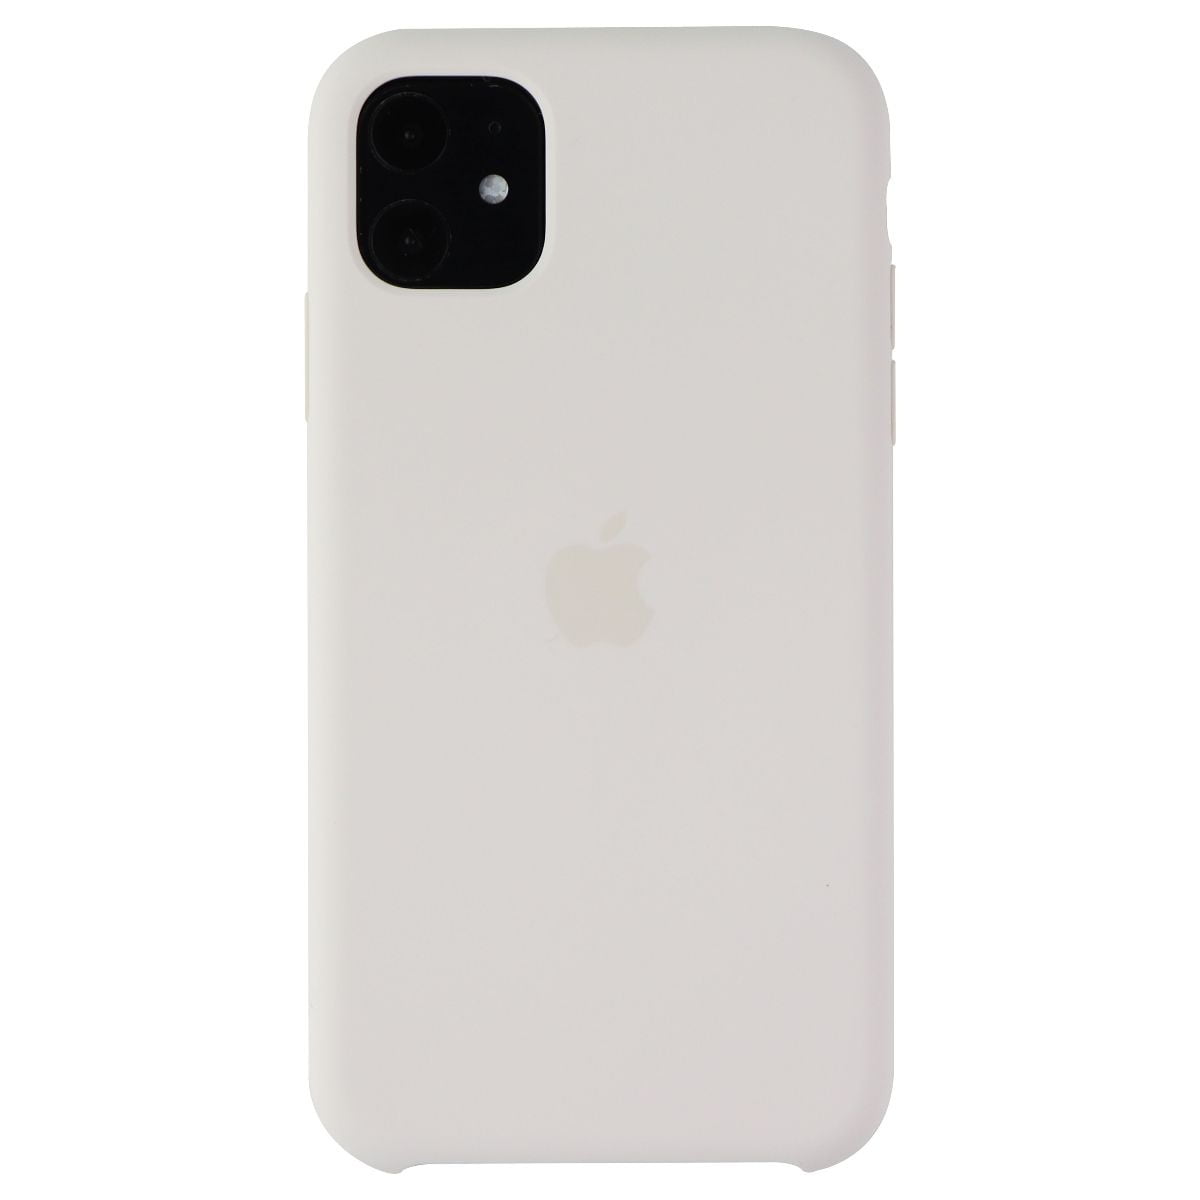 Apple Silicone Case For Iphone 11 Smartphones White Mwvx2zm A Refurbished Walmart Com Walmart Com